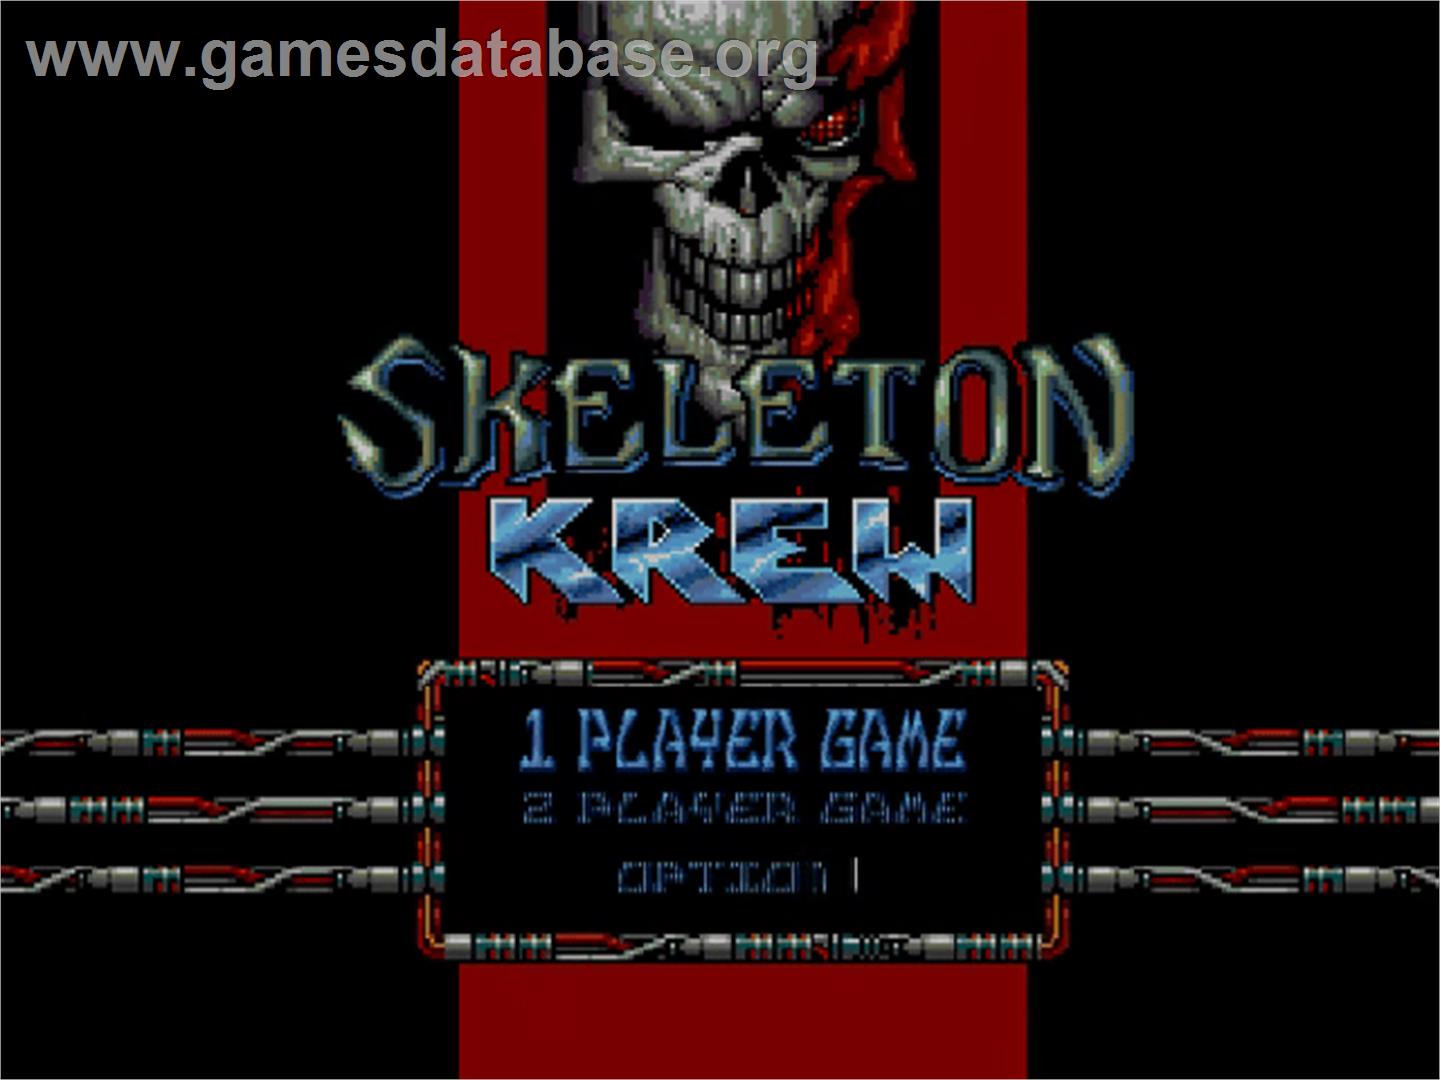 Skeleton Krew - Commodore Amiga CD32 - Artwork - Title Screen